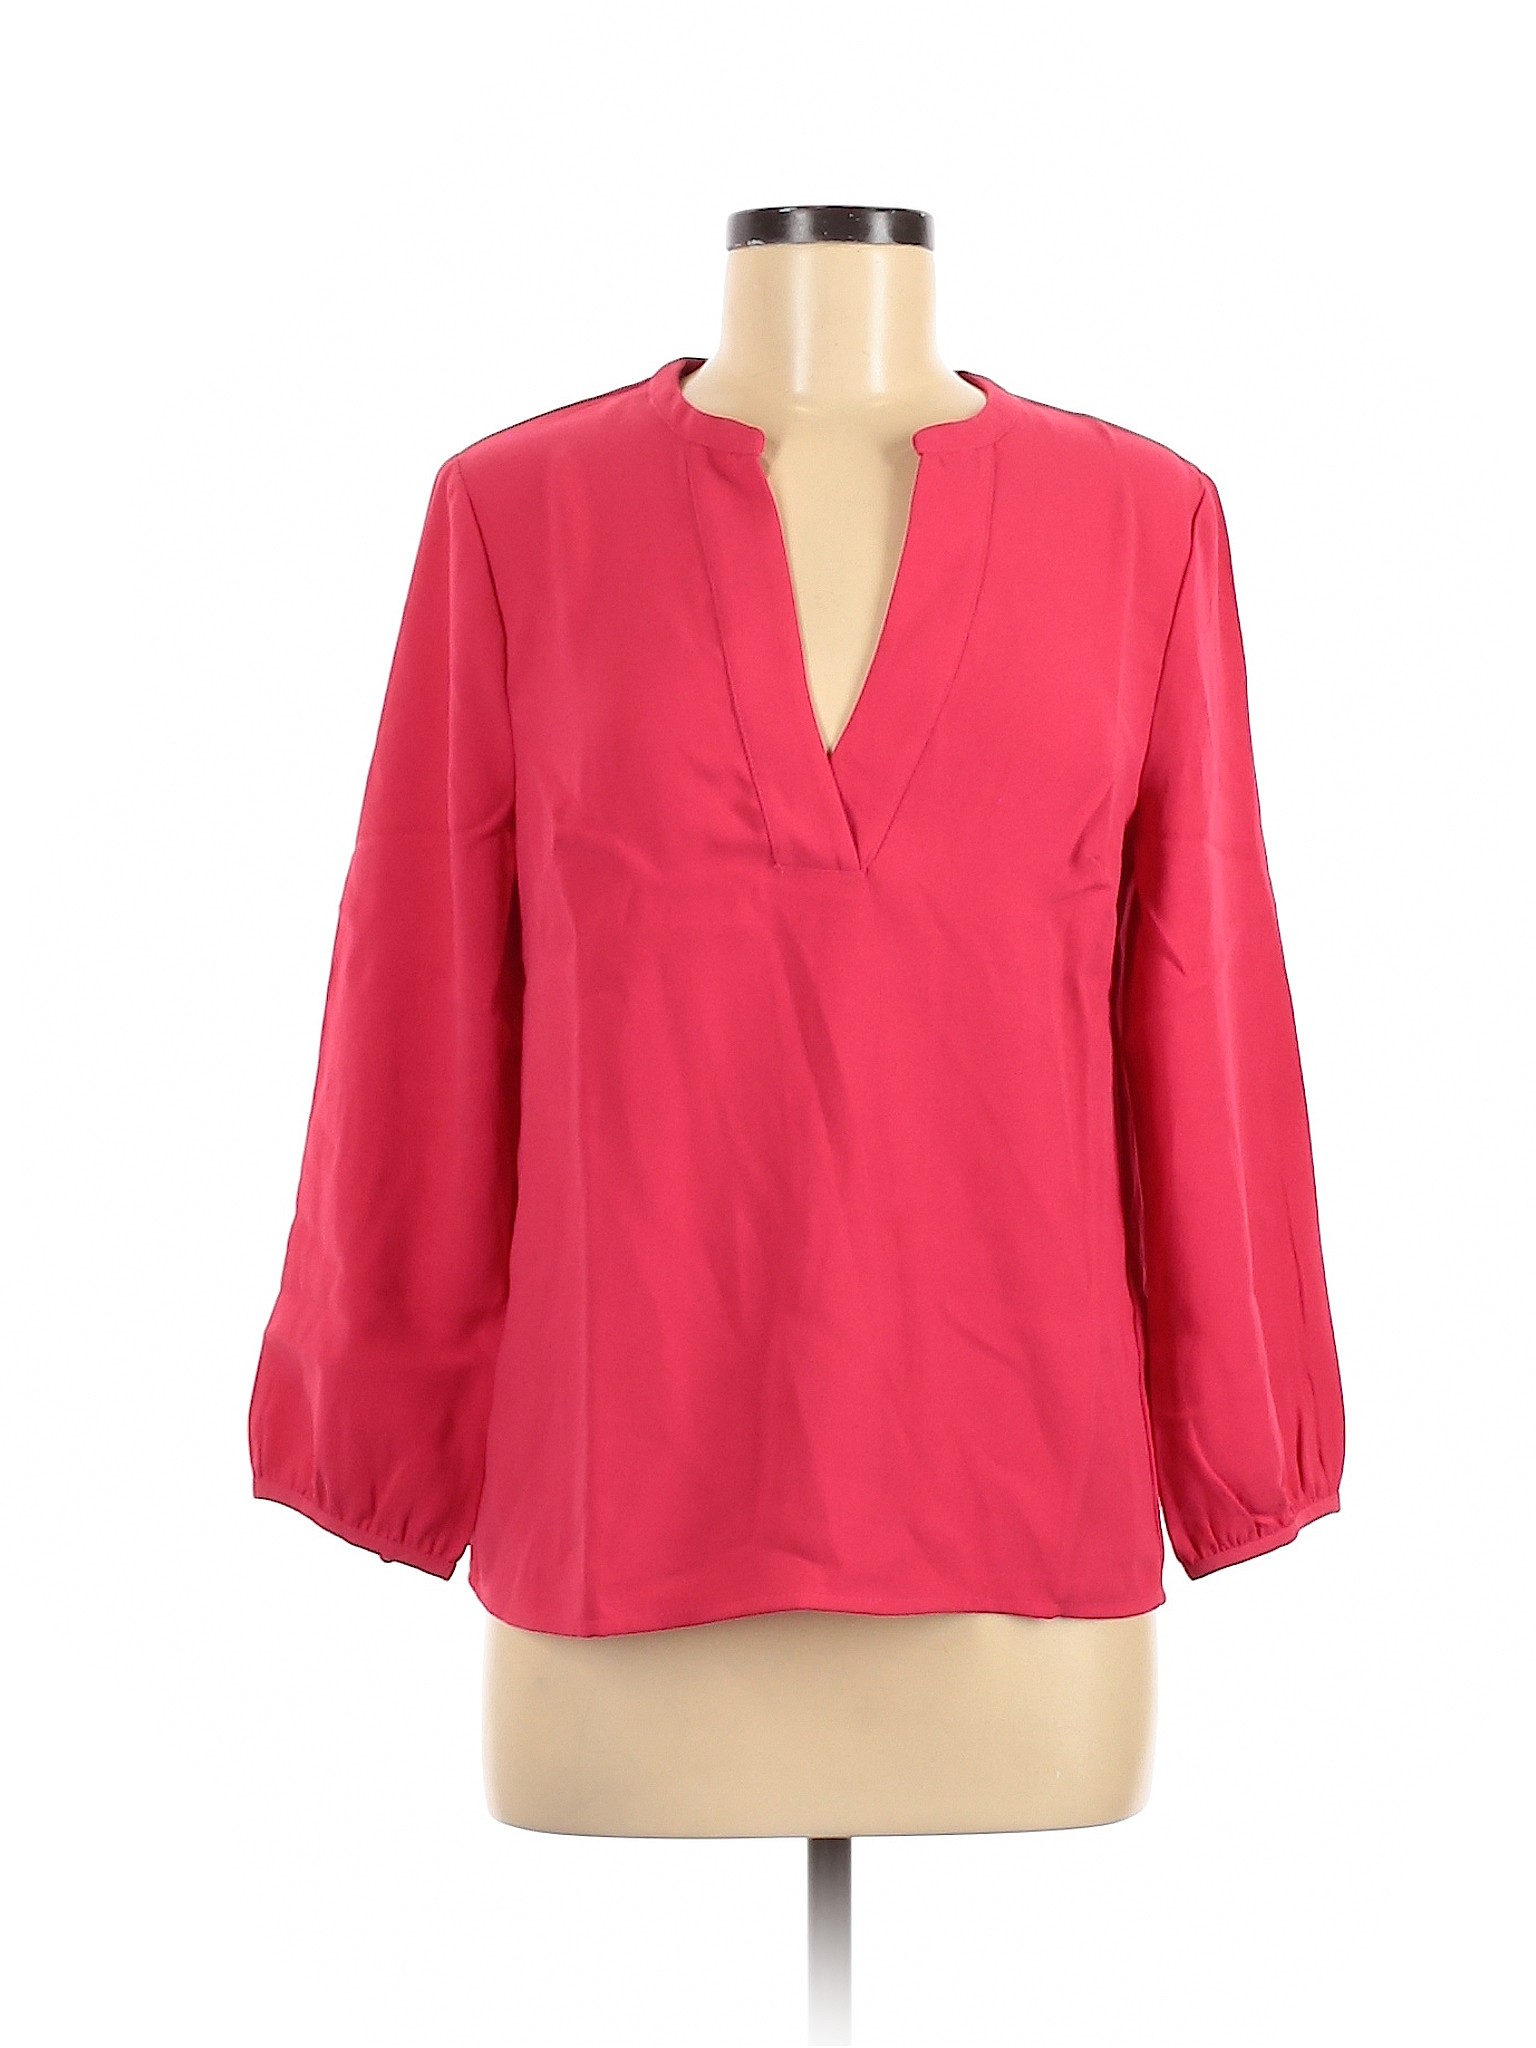 NWT J. Crew Women Pink Long Sleeve Blouse S | eBay